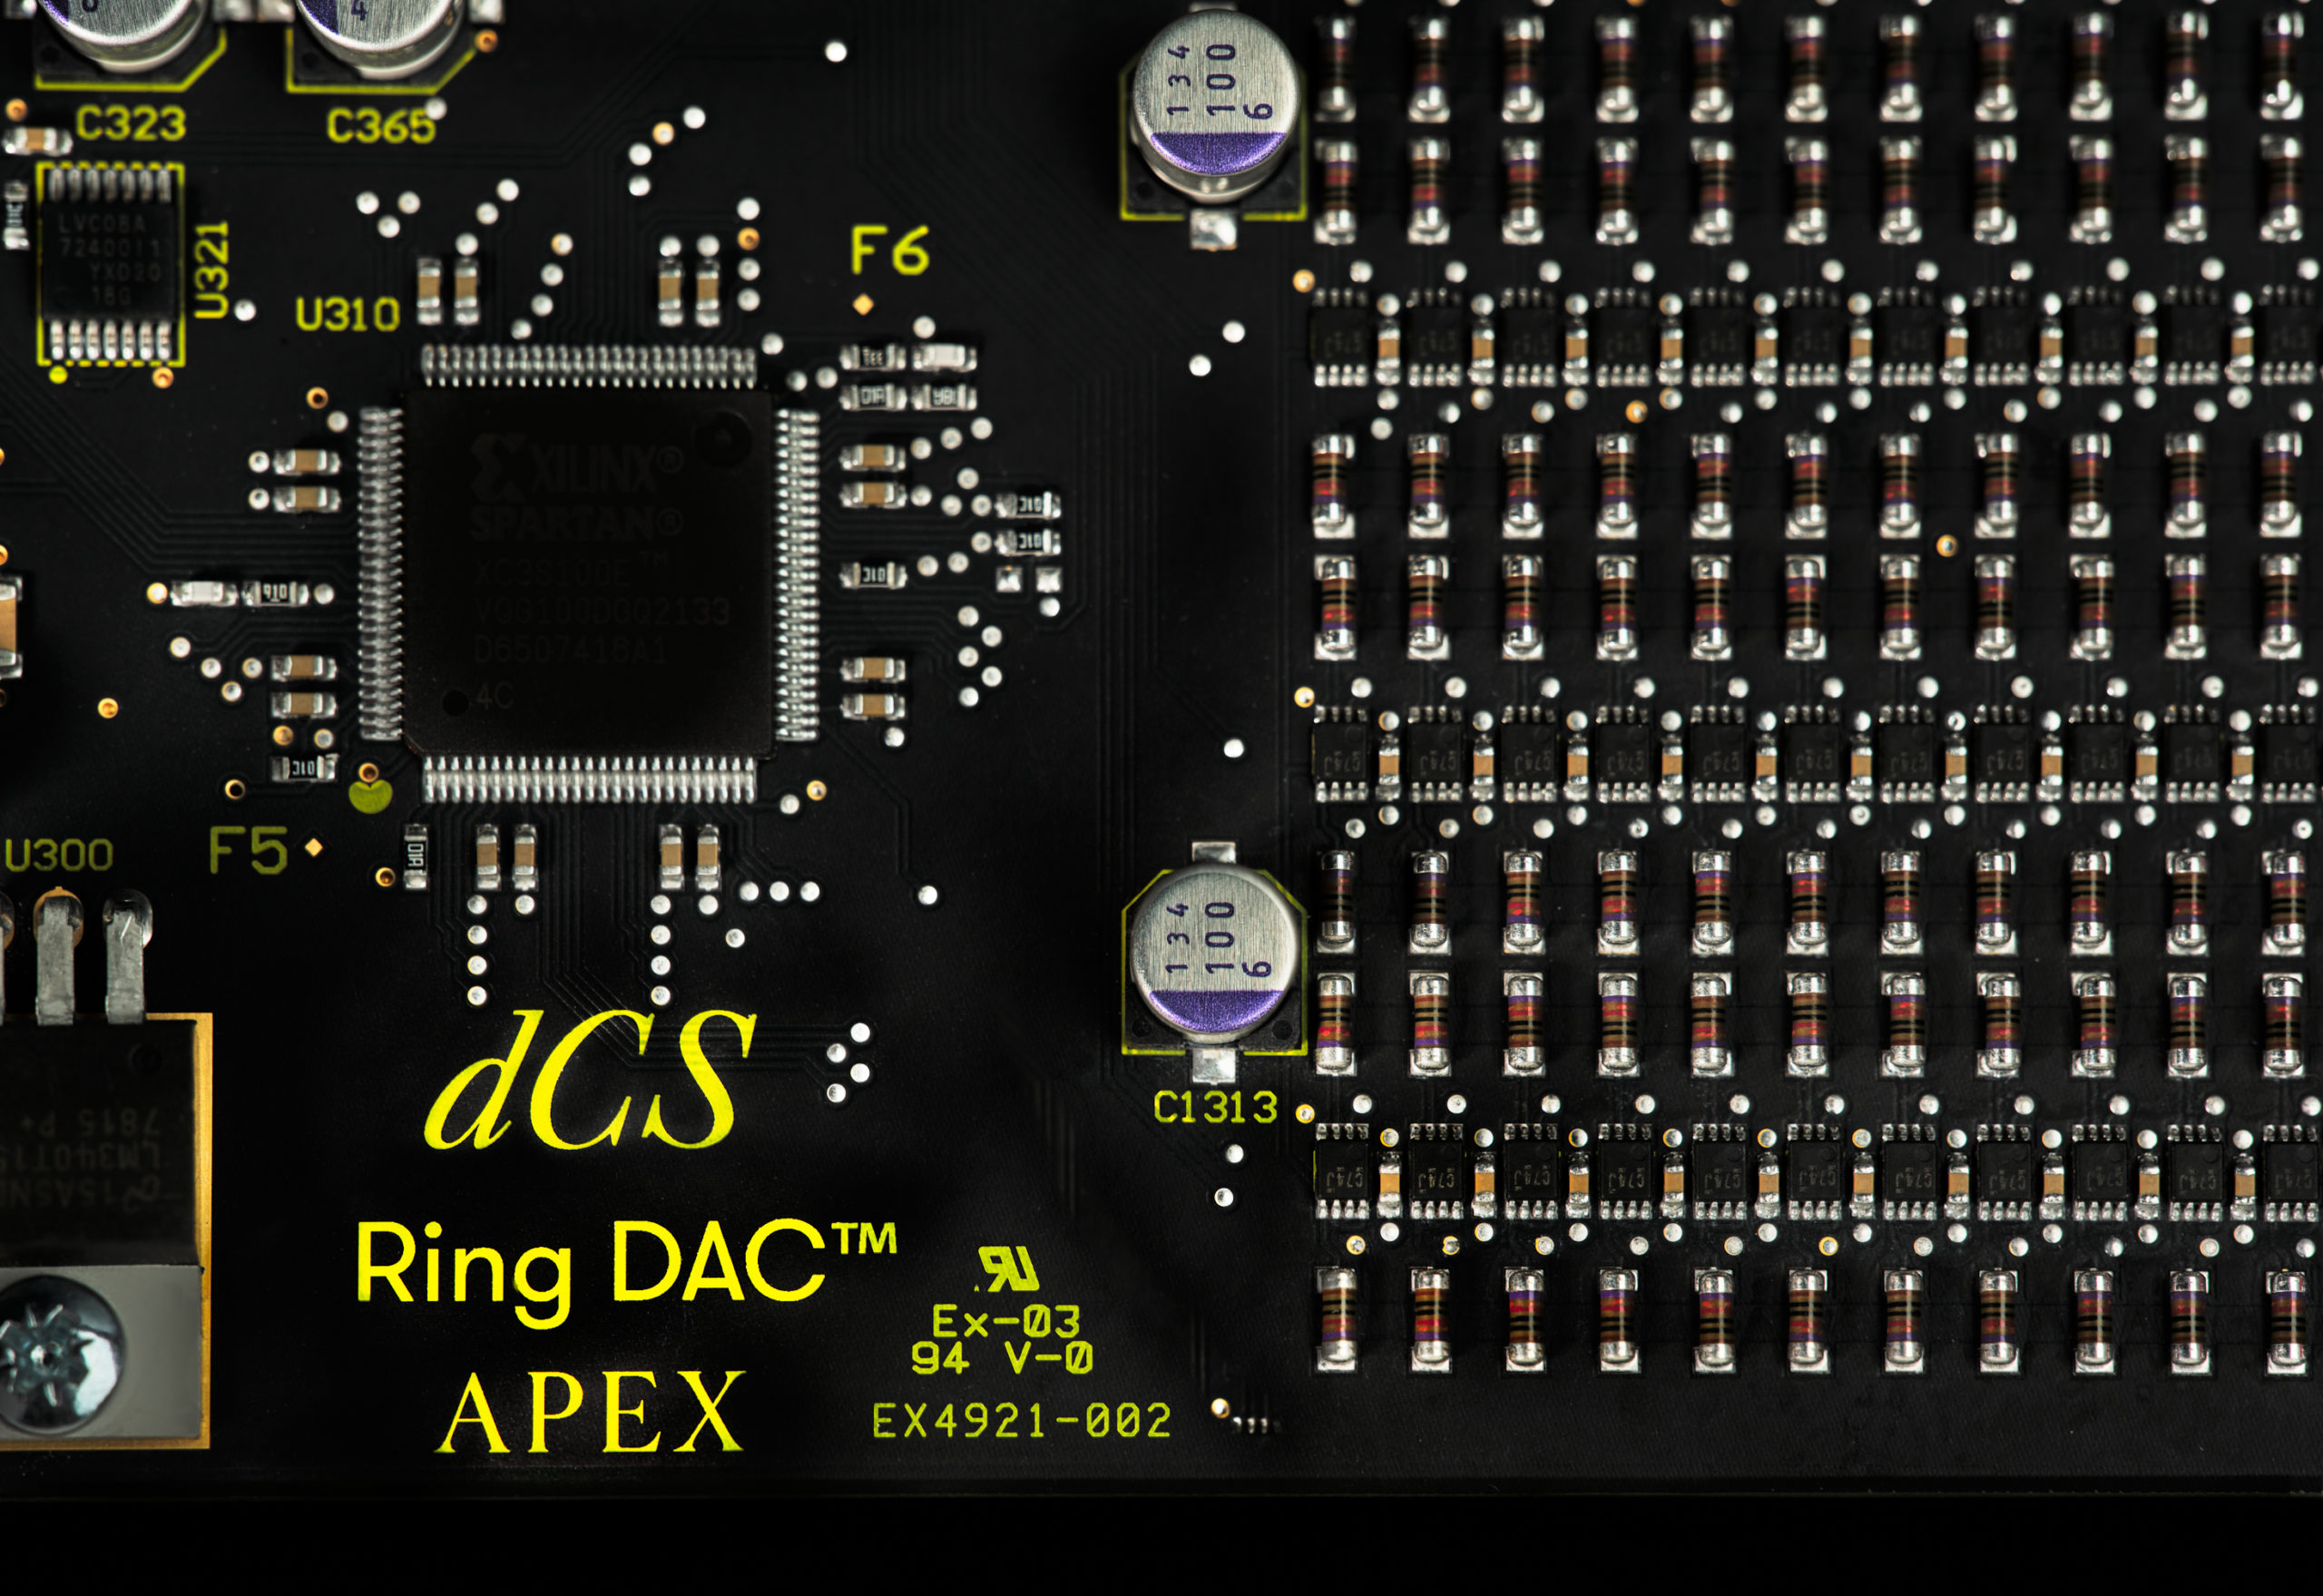 Robert Harley Explains the dCS Ring DAC